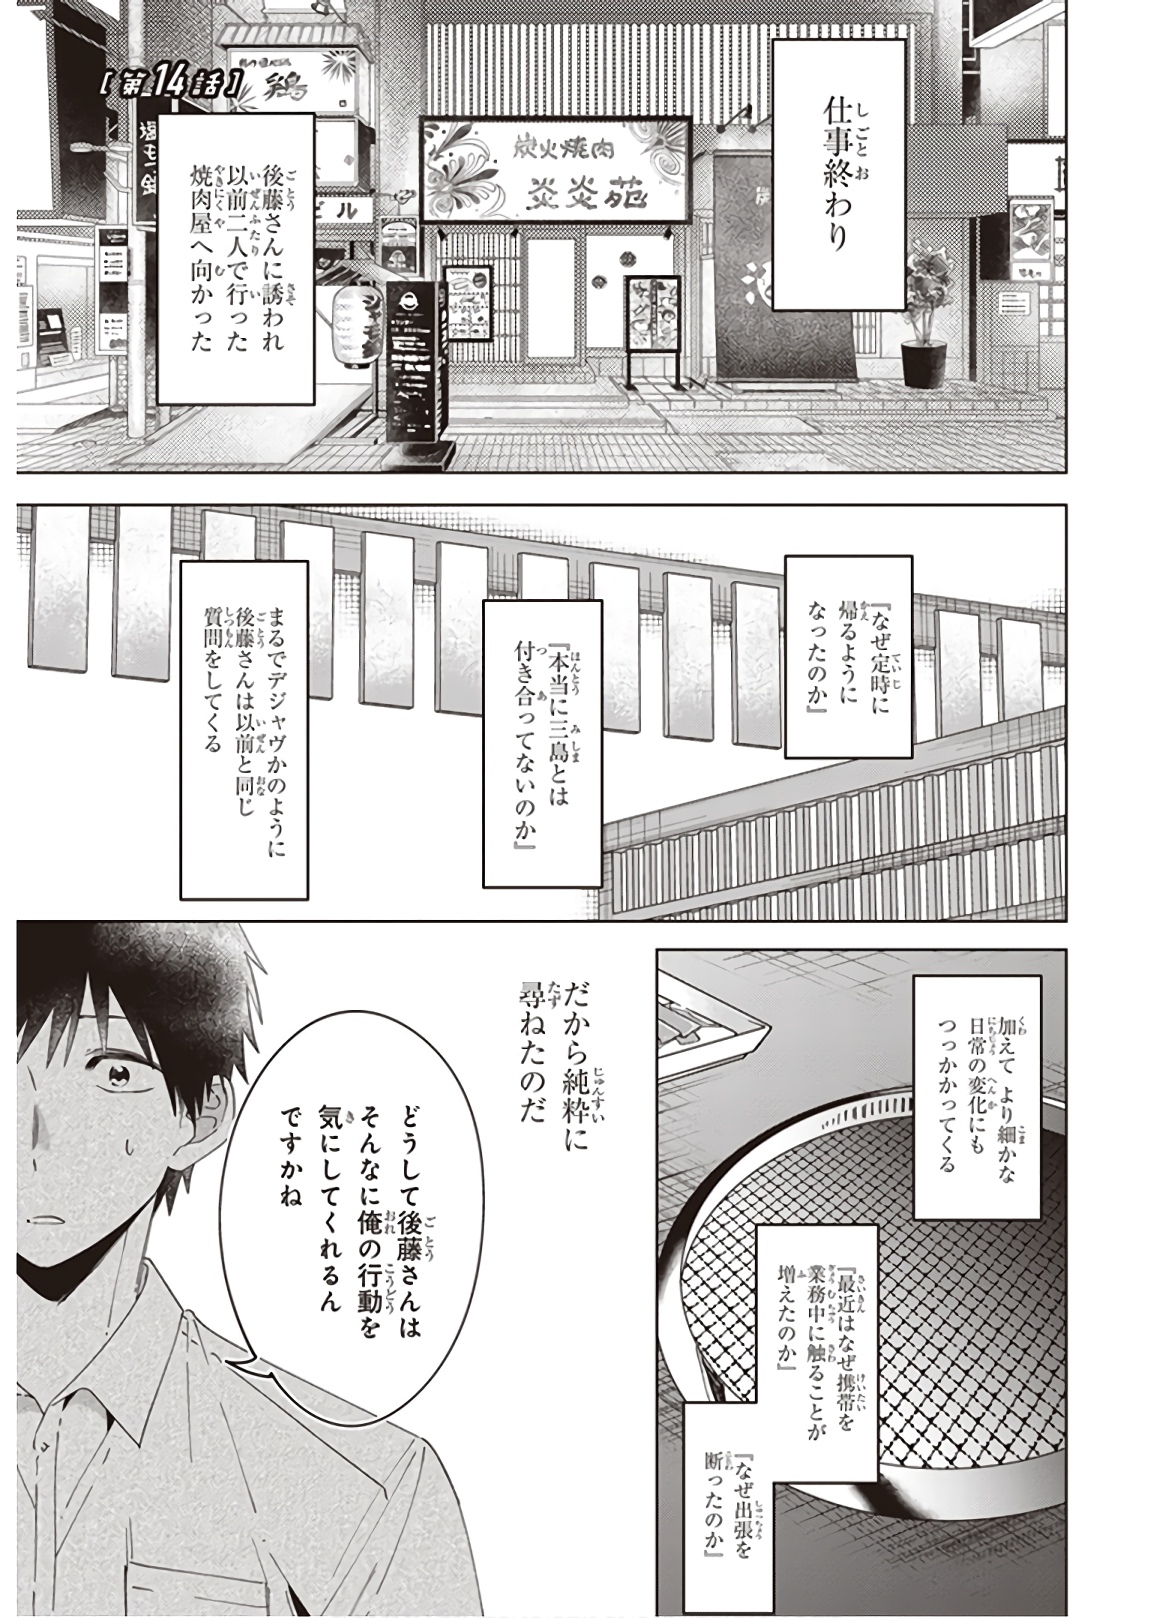 Hige wo Soru. Soshite Joshikousei wo Hirou. - Chapter 14 - Page 1